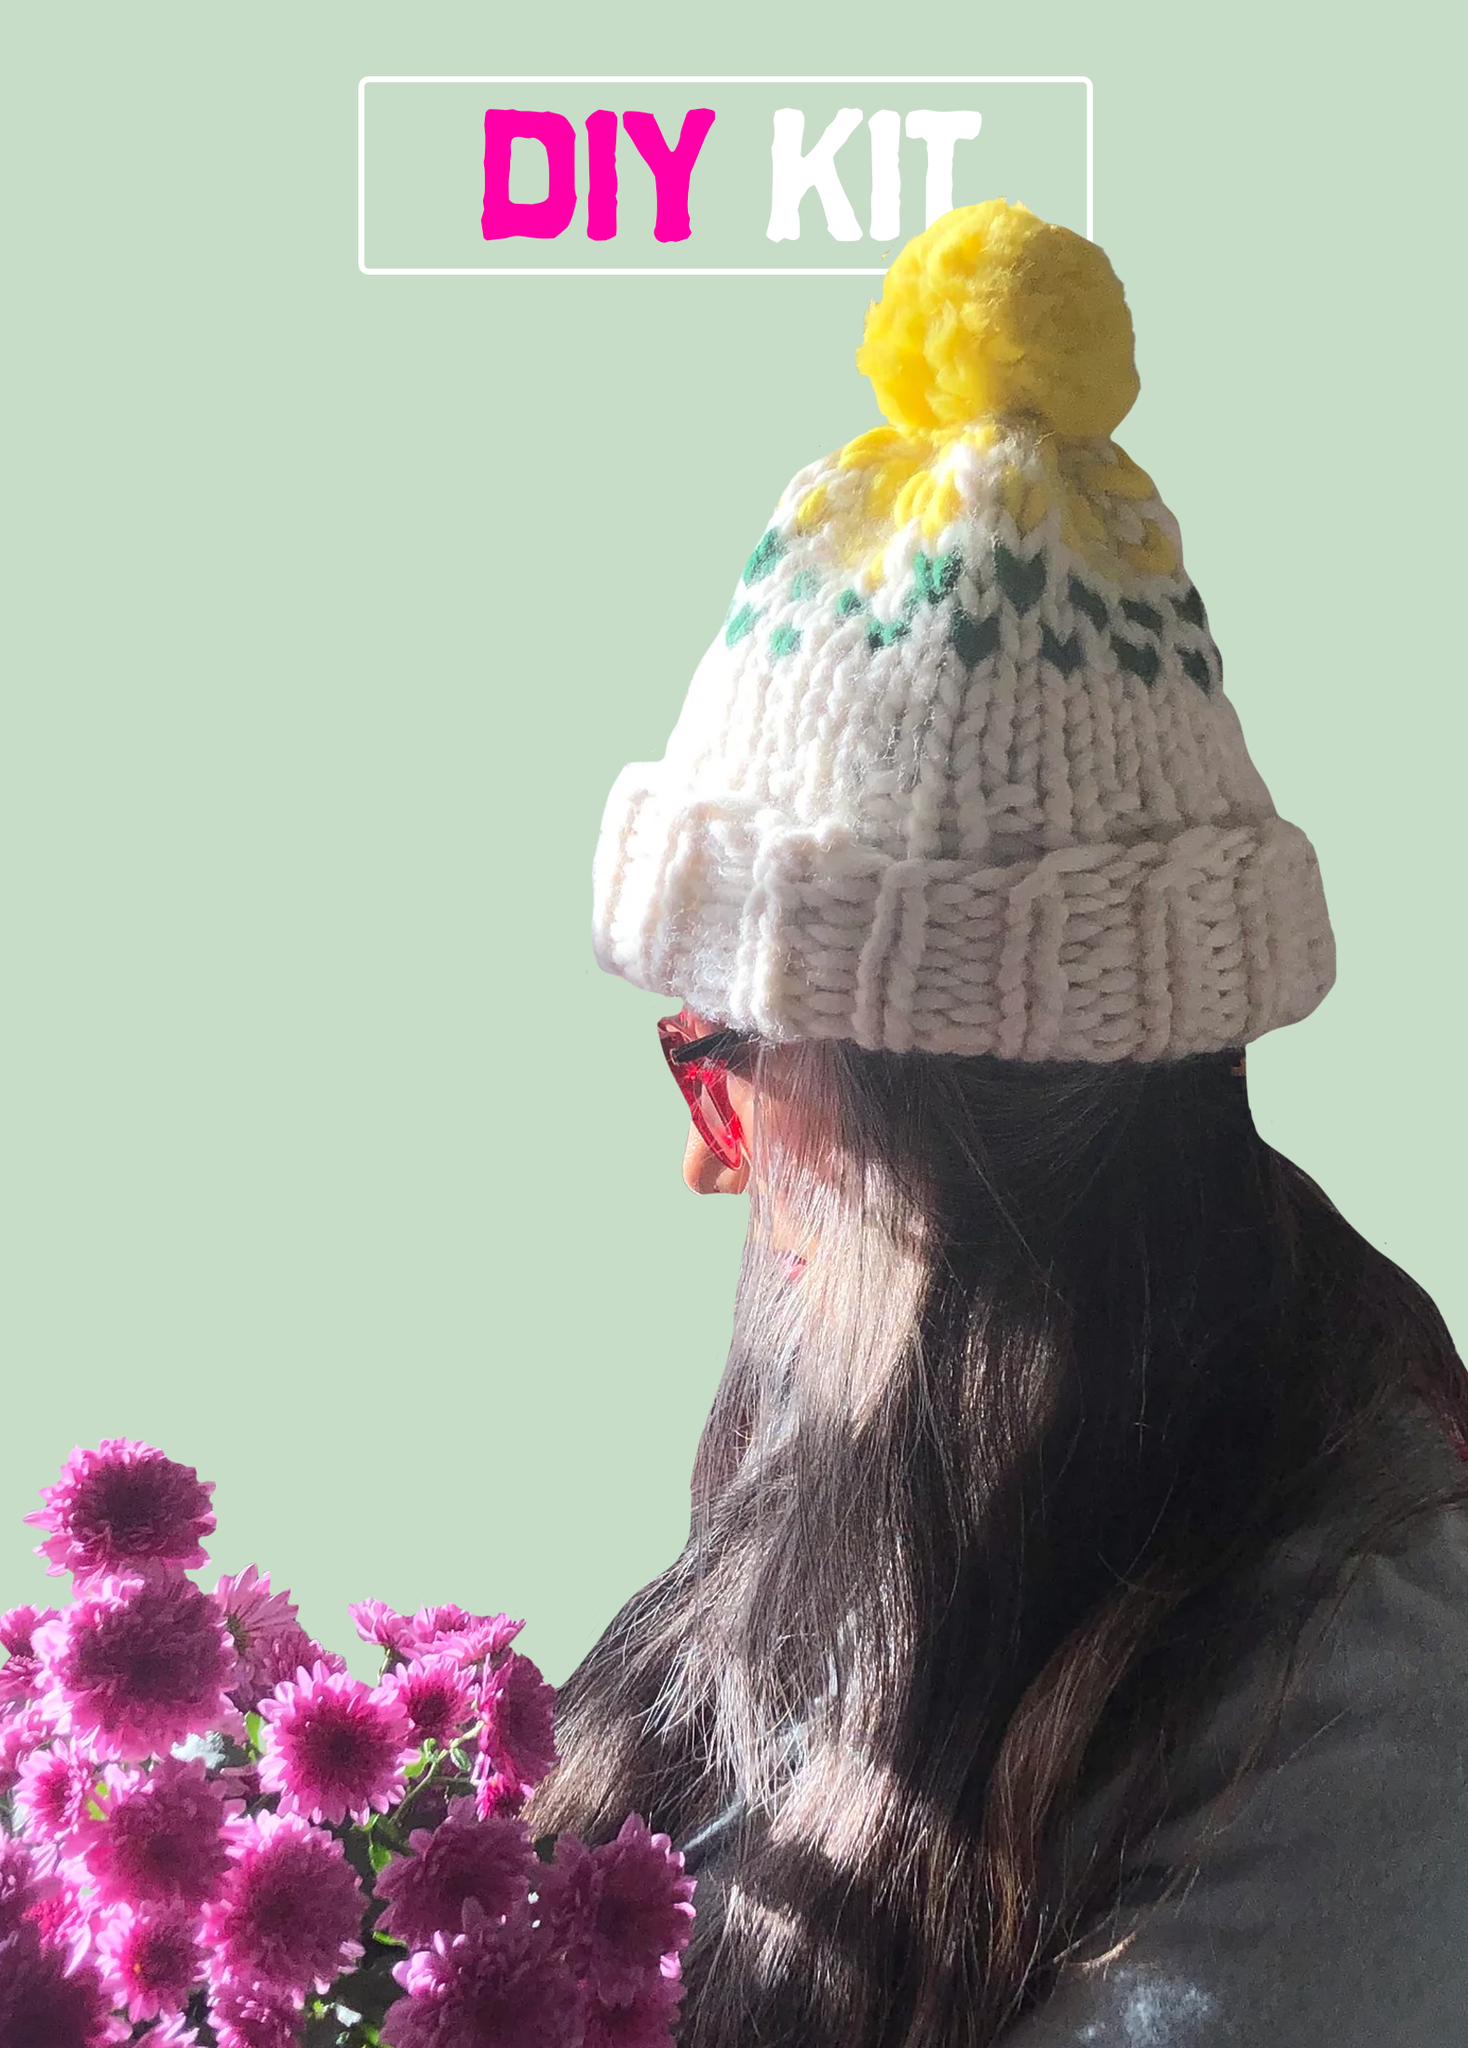 MRULIC Knitting Pom DIY Button Hats Pom AccessiresFaux Ball with